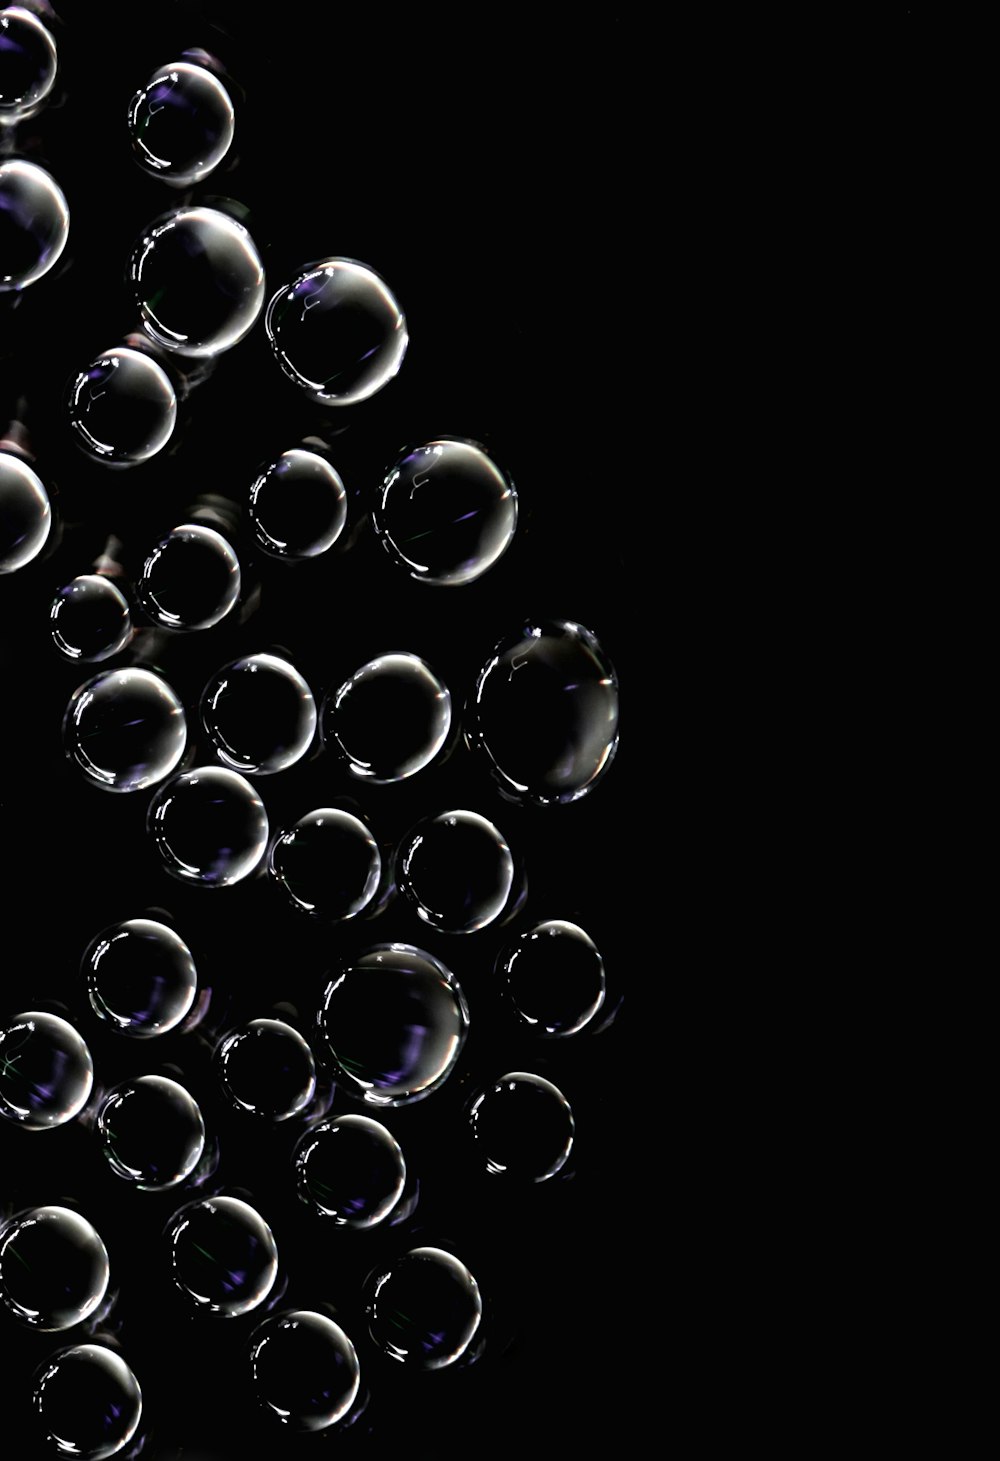 black and white bubbles wallpaper